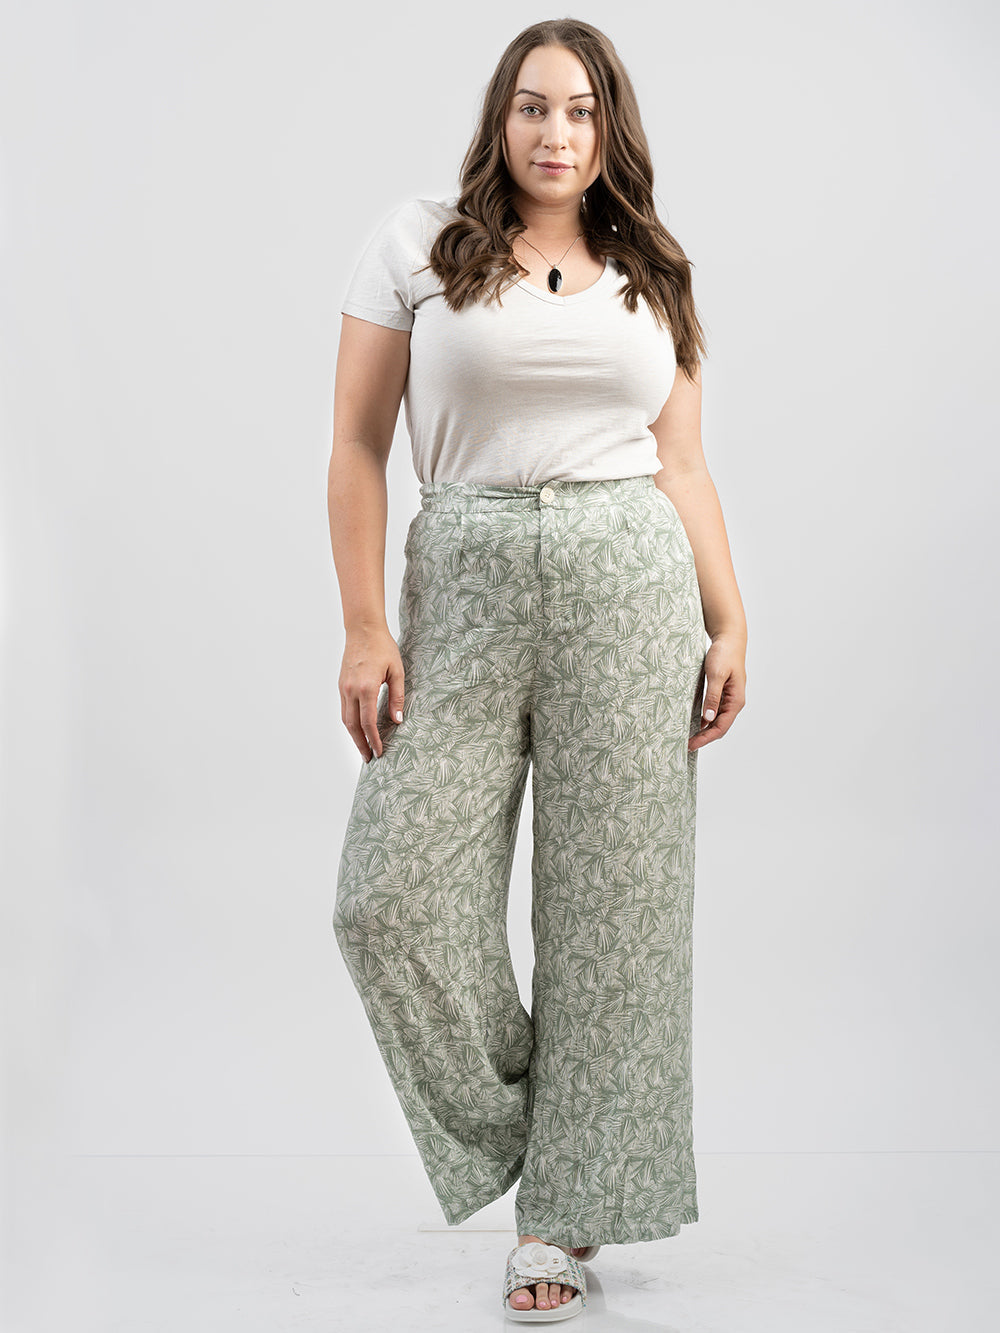 Women Floral Print Pants - Cowgirl Wear